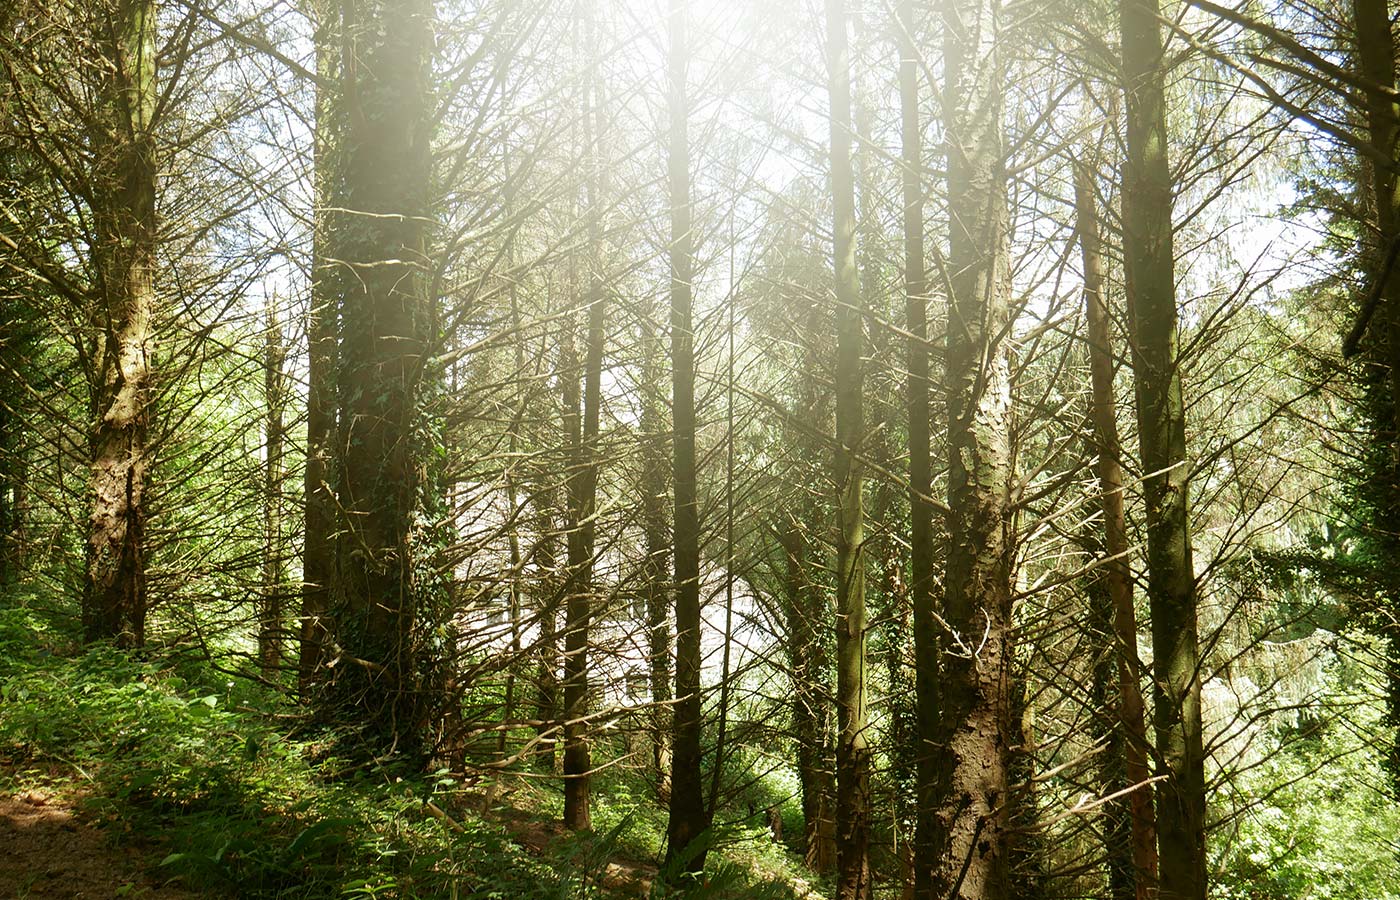 The sun shining through the trees in Marjon's woods